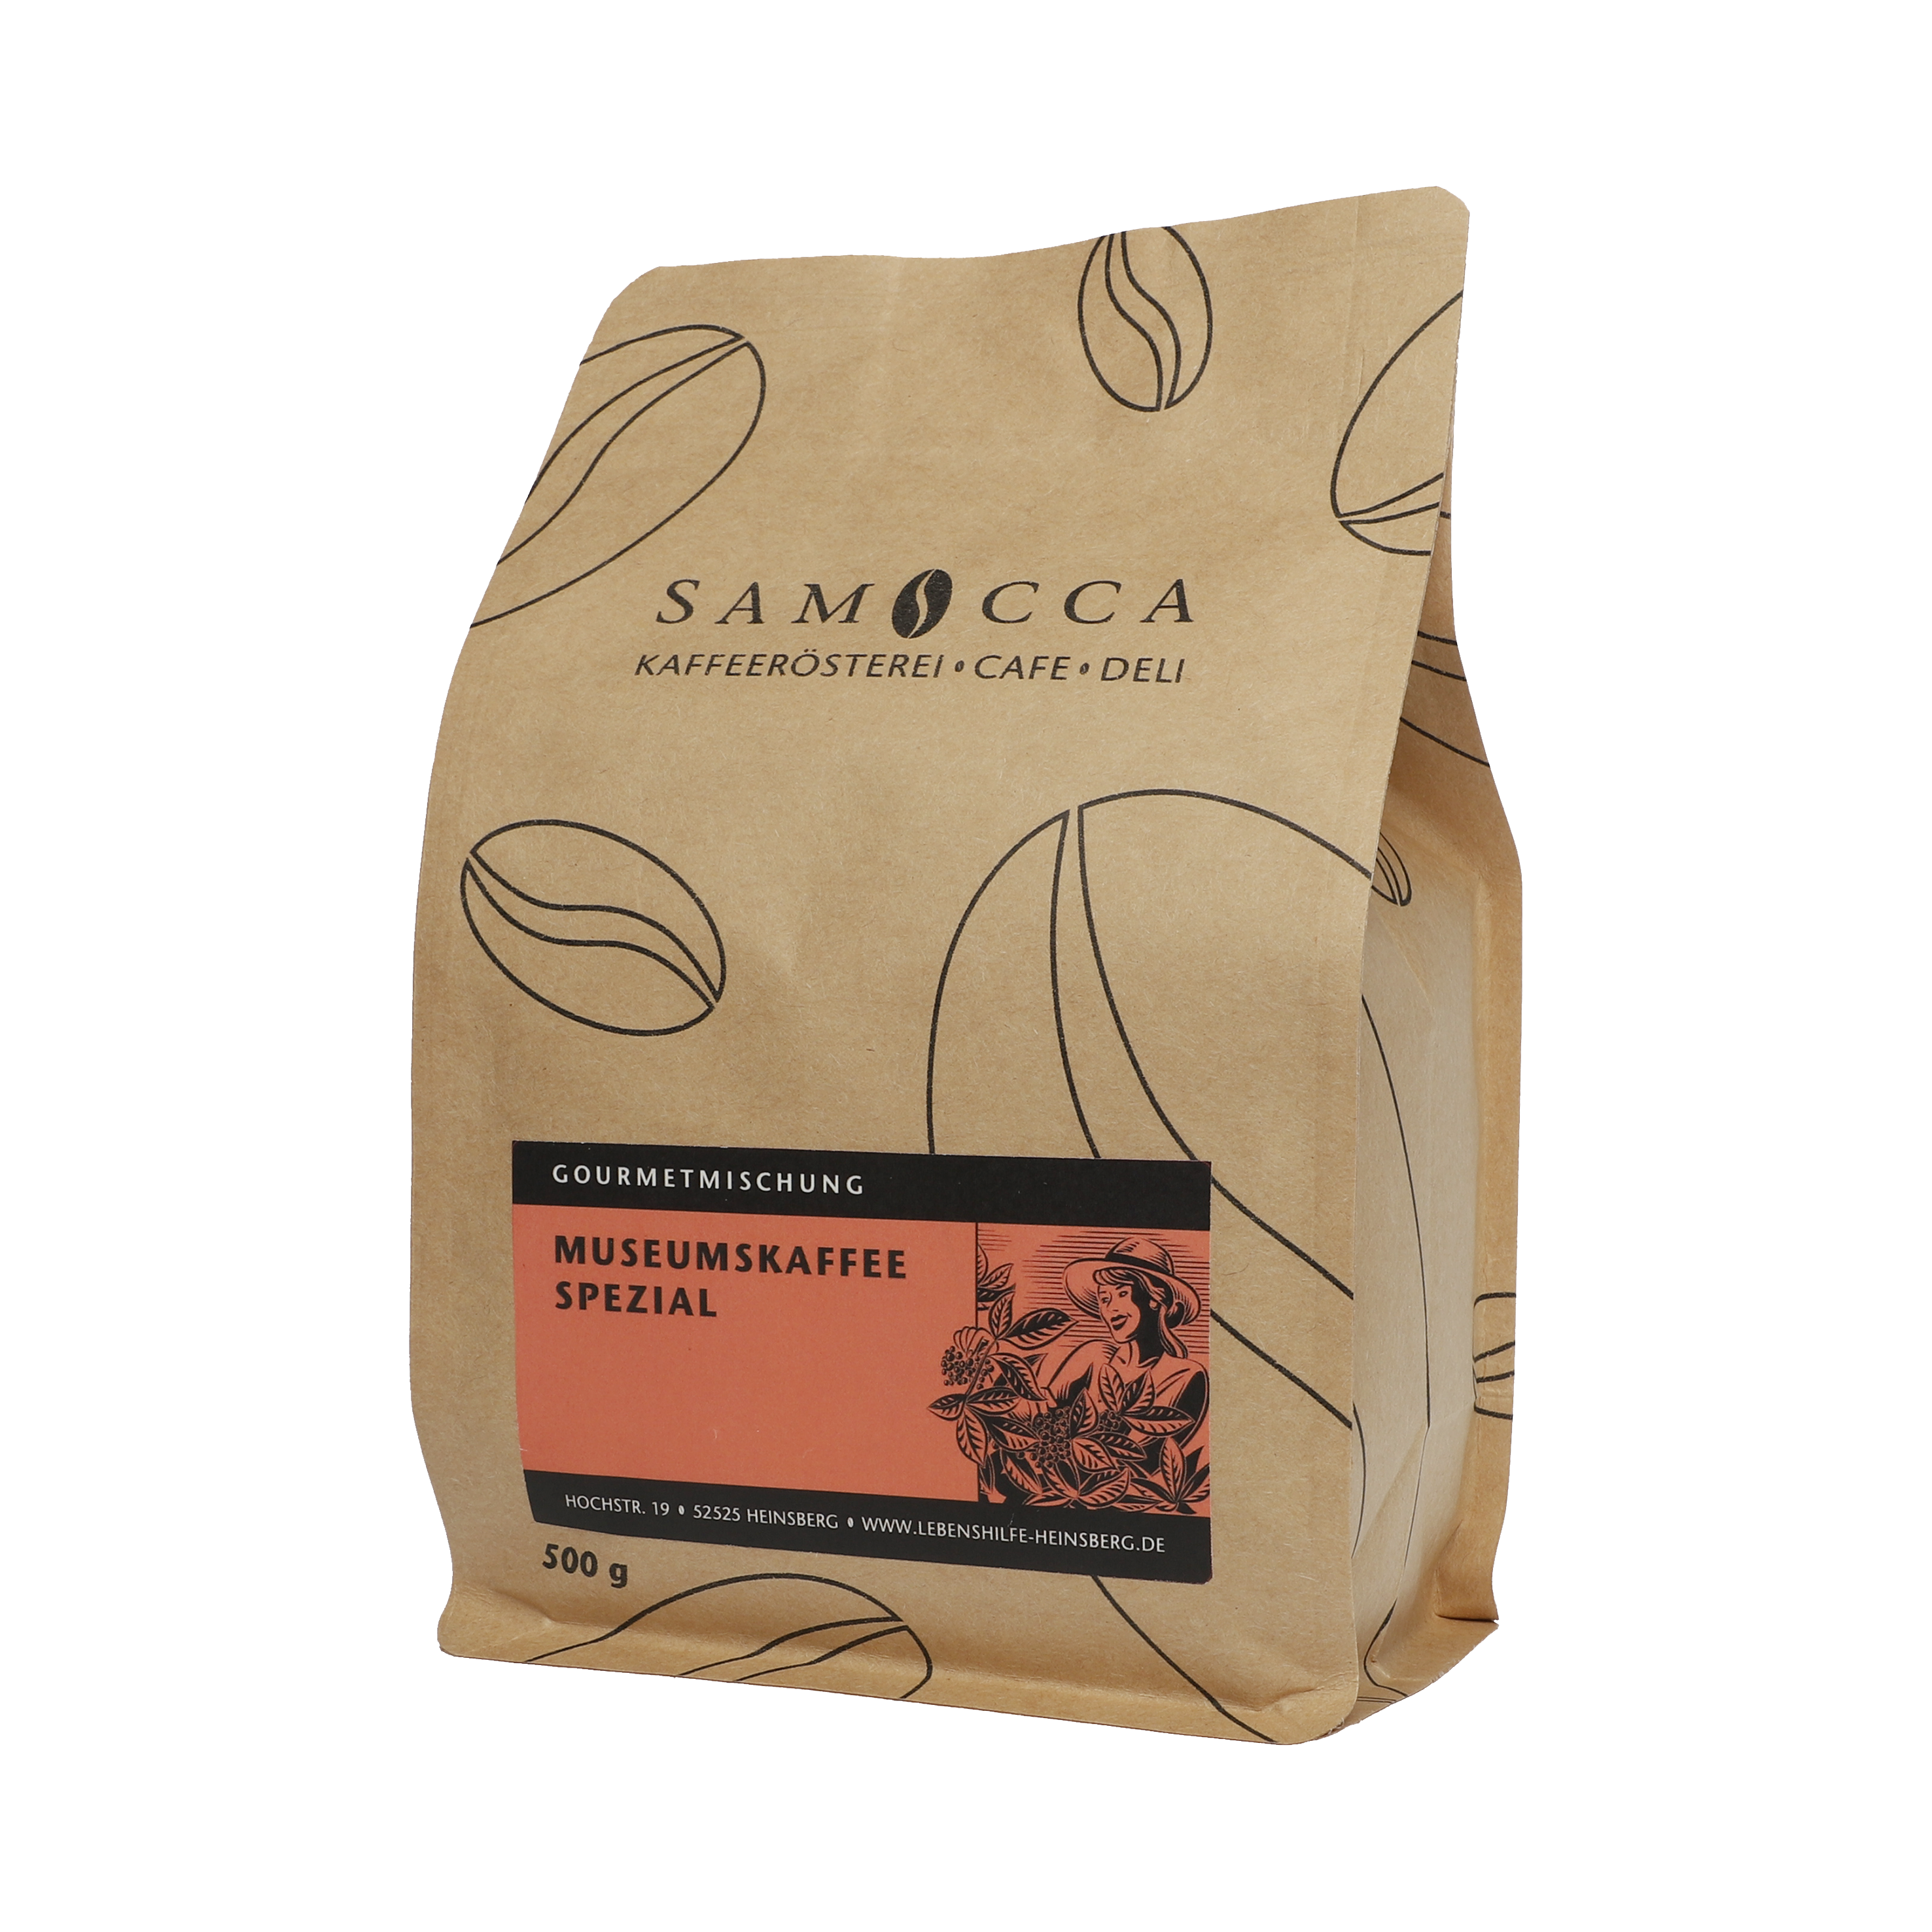 Samocca Museumskaffee Spezial 500g (1)